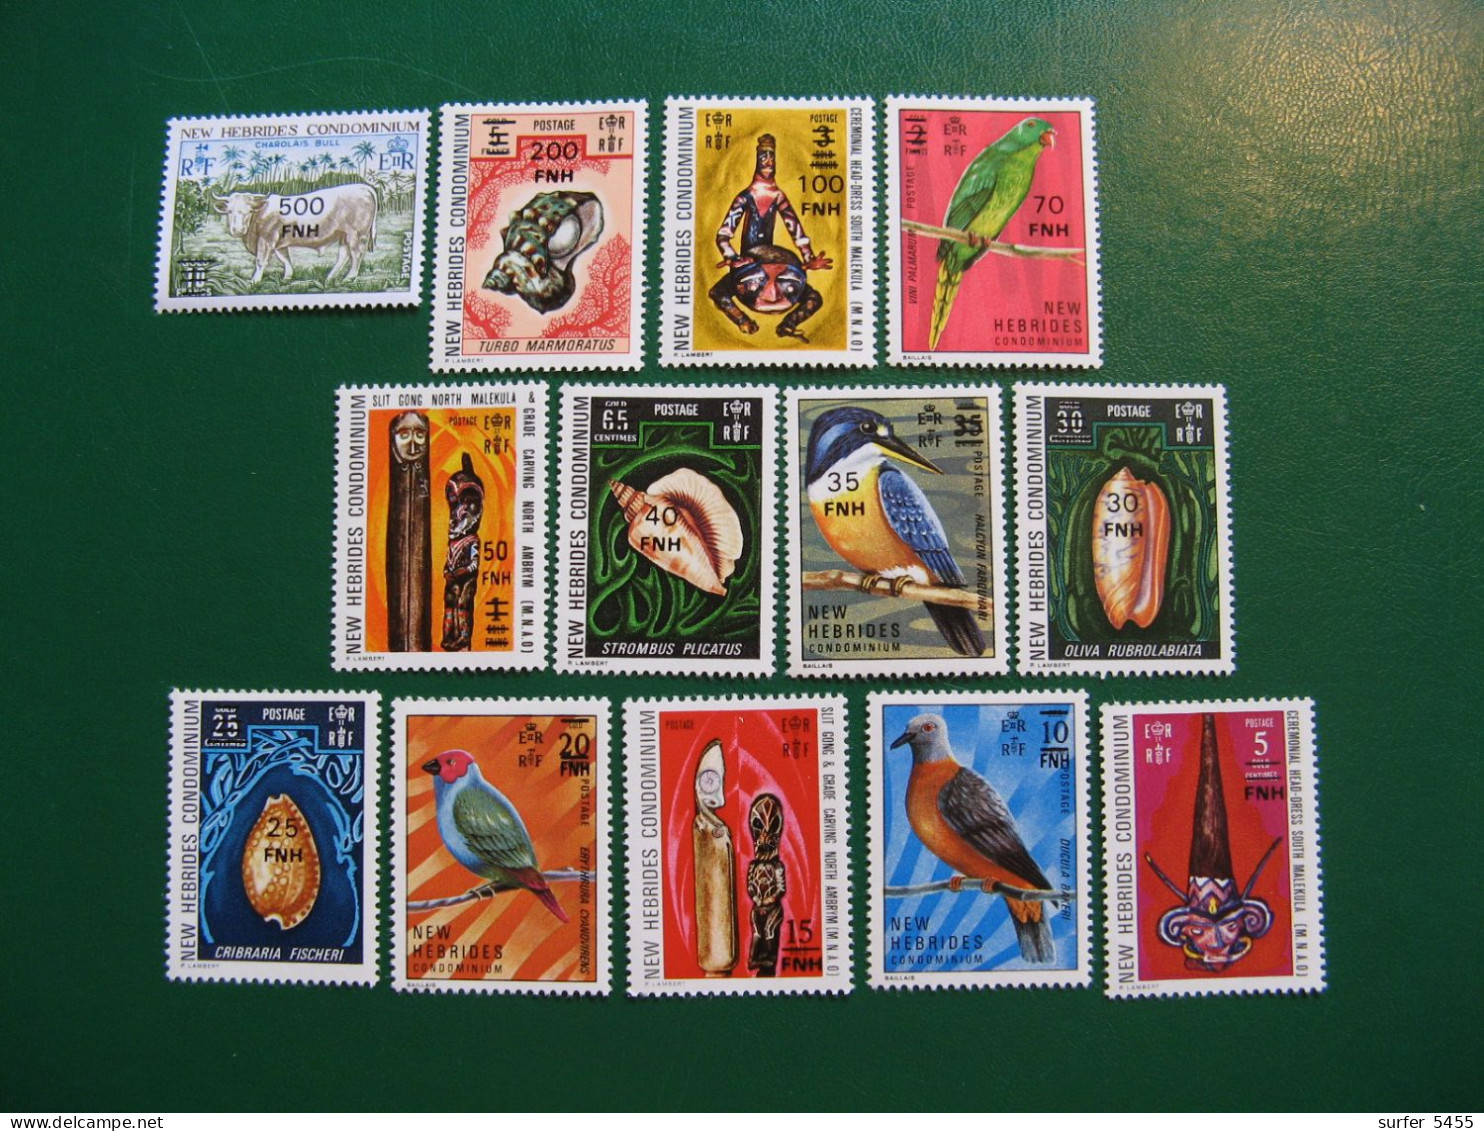 NOUVELLES HEBRIDES POSTE ORDINAIRE N° 463/475 TIMBRES NEUFS** LUXE COTE 128,00 EUROS - Unused Stamps